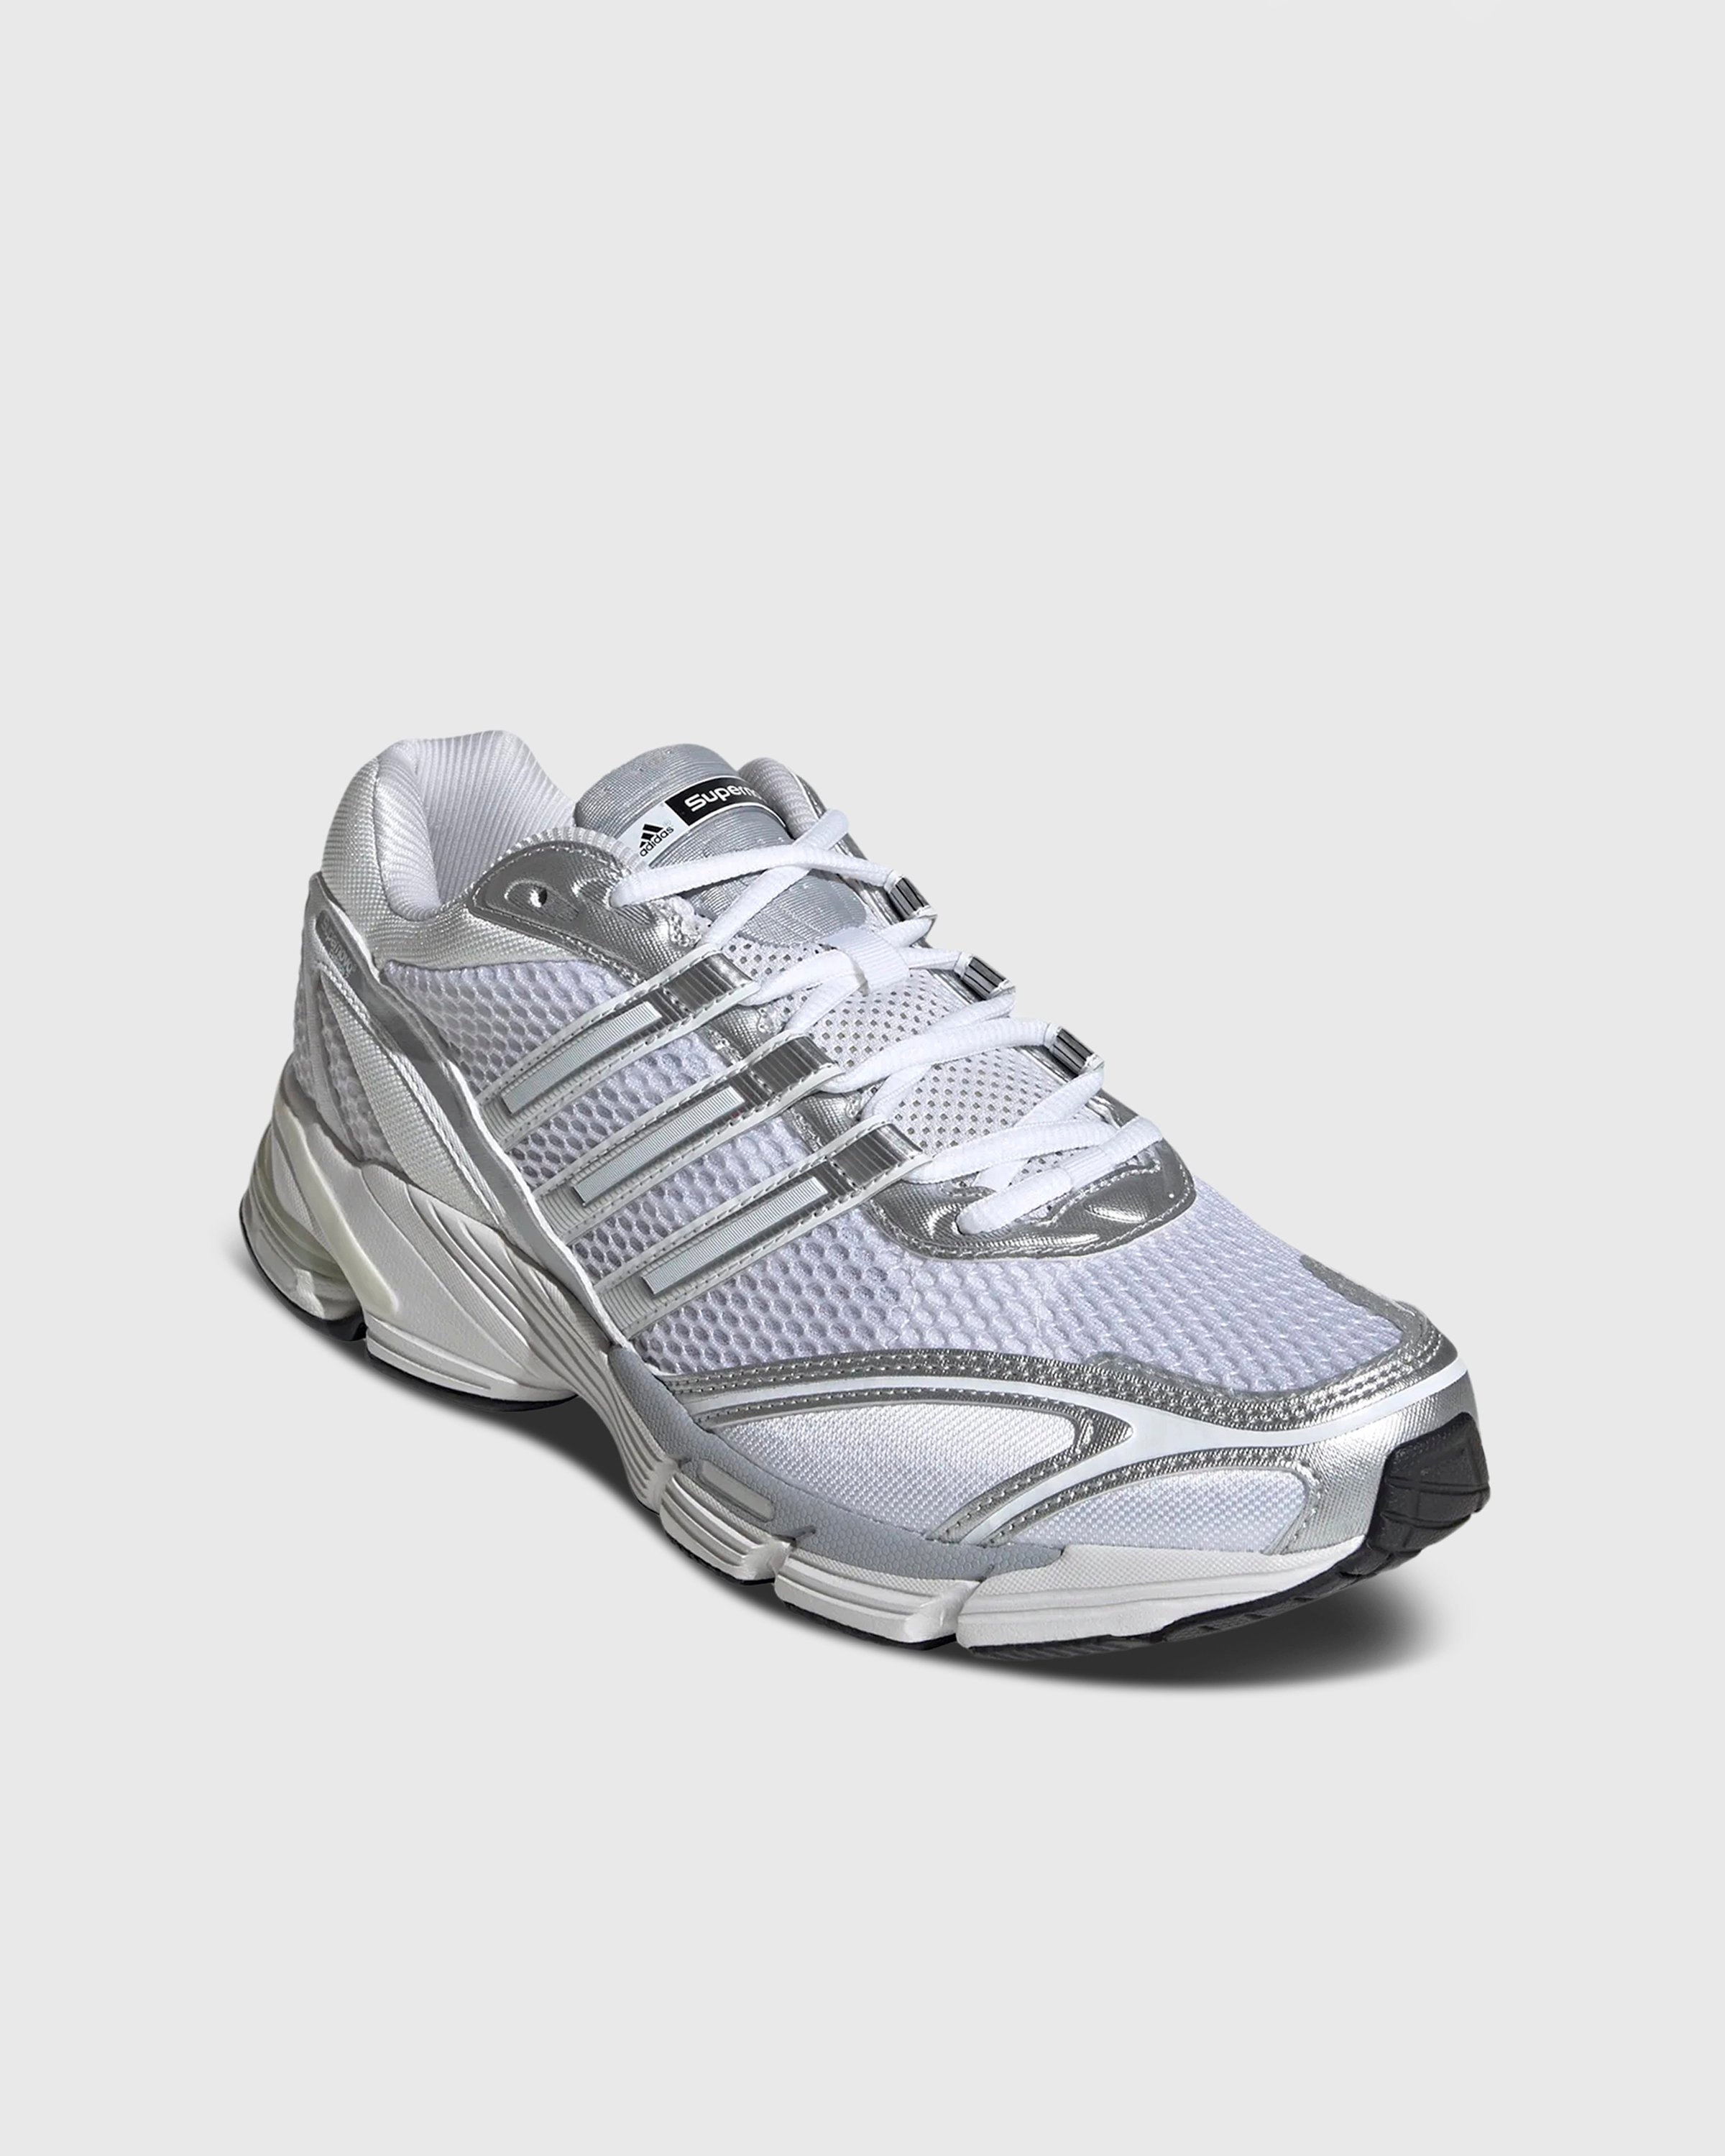 Adidas - SUPERNOVA CUSHION 7 FTWWHT/SILVMT/CRYWHT - Footwear - White - Image 3